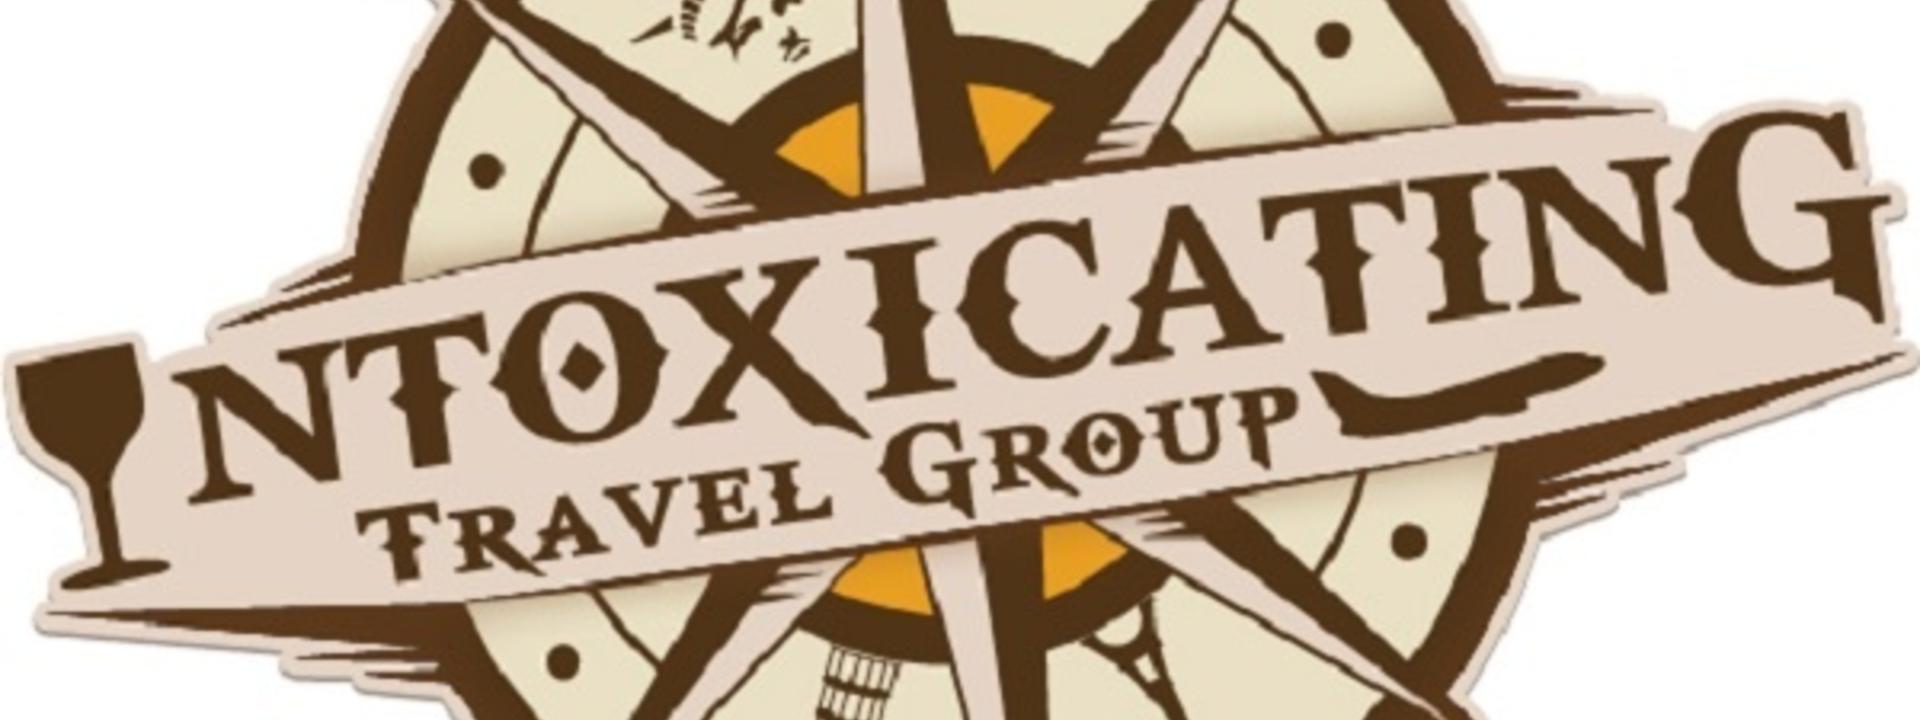 Logo: Intoxicating Travel Group llc